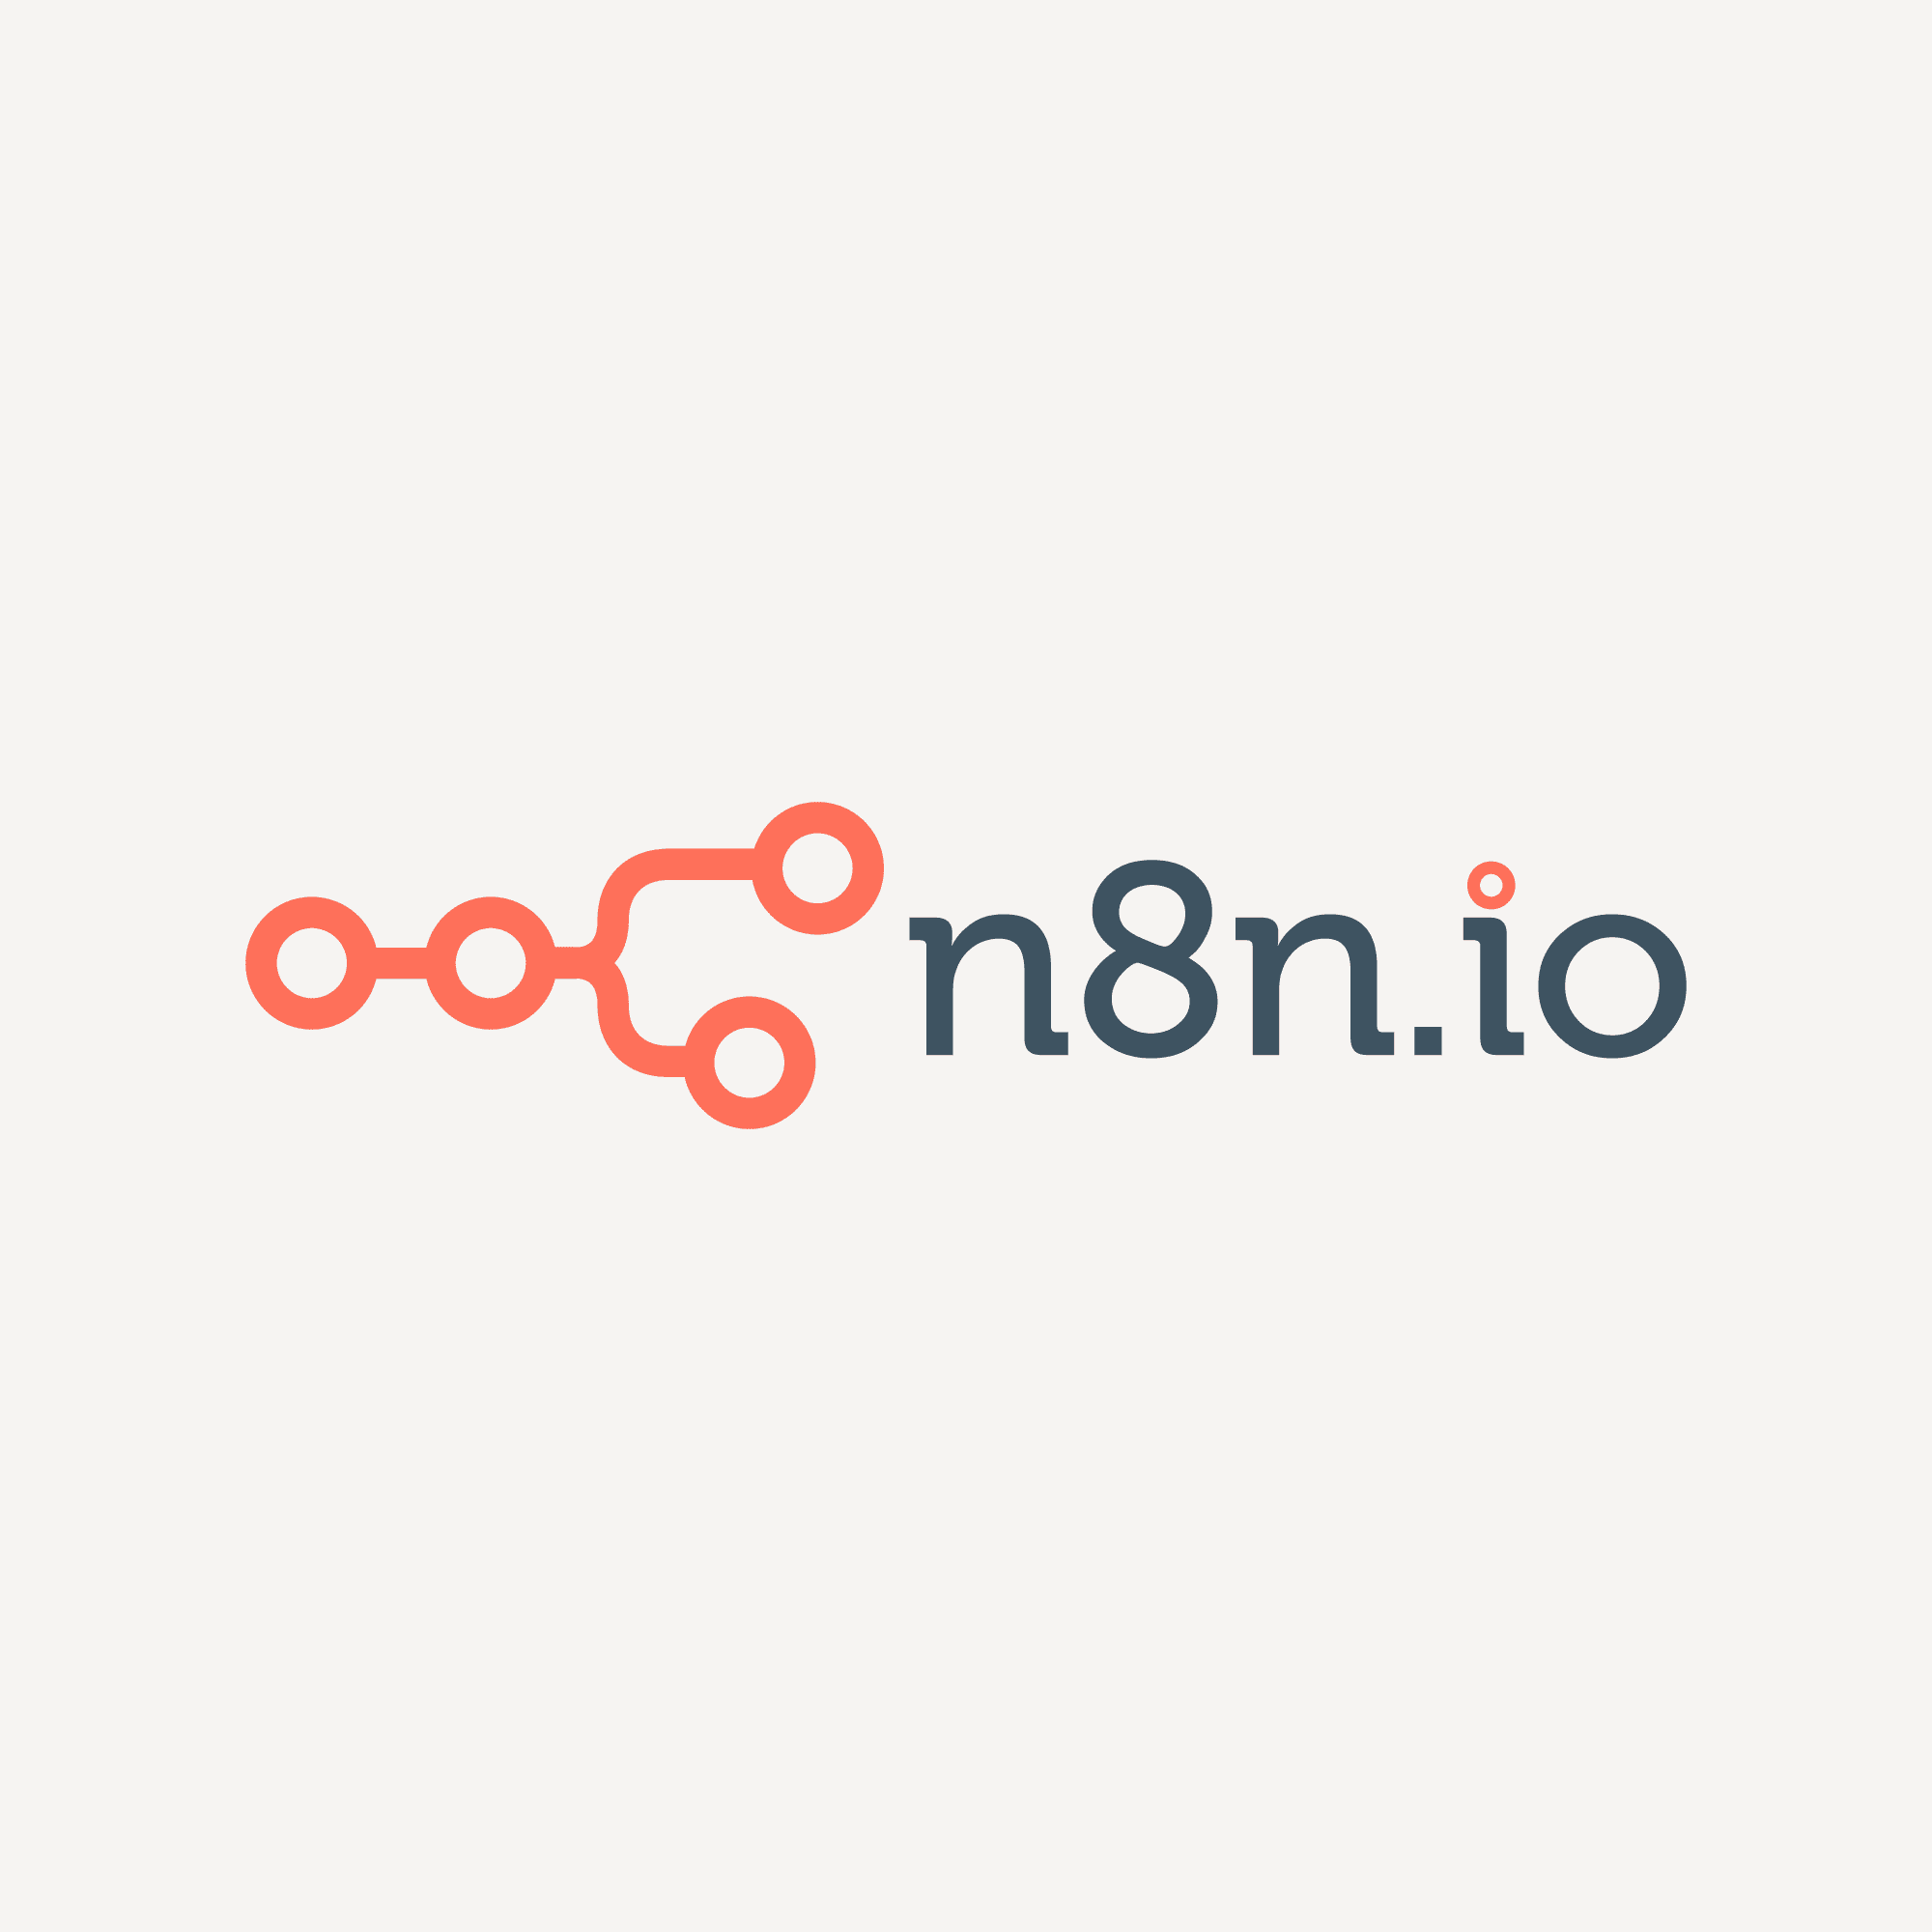 Logos io. N8n лого. Bubble.io логотип. Ио для логотипа. NFTB,io логотип.